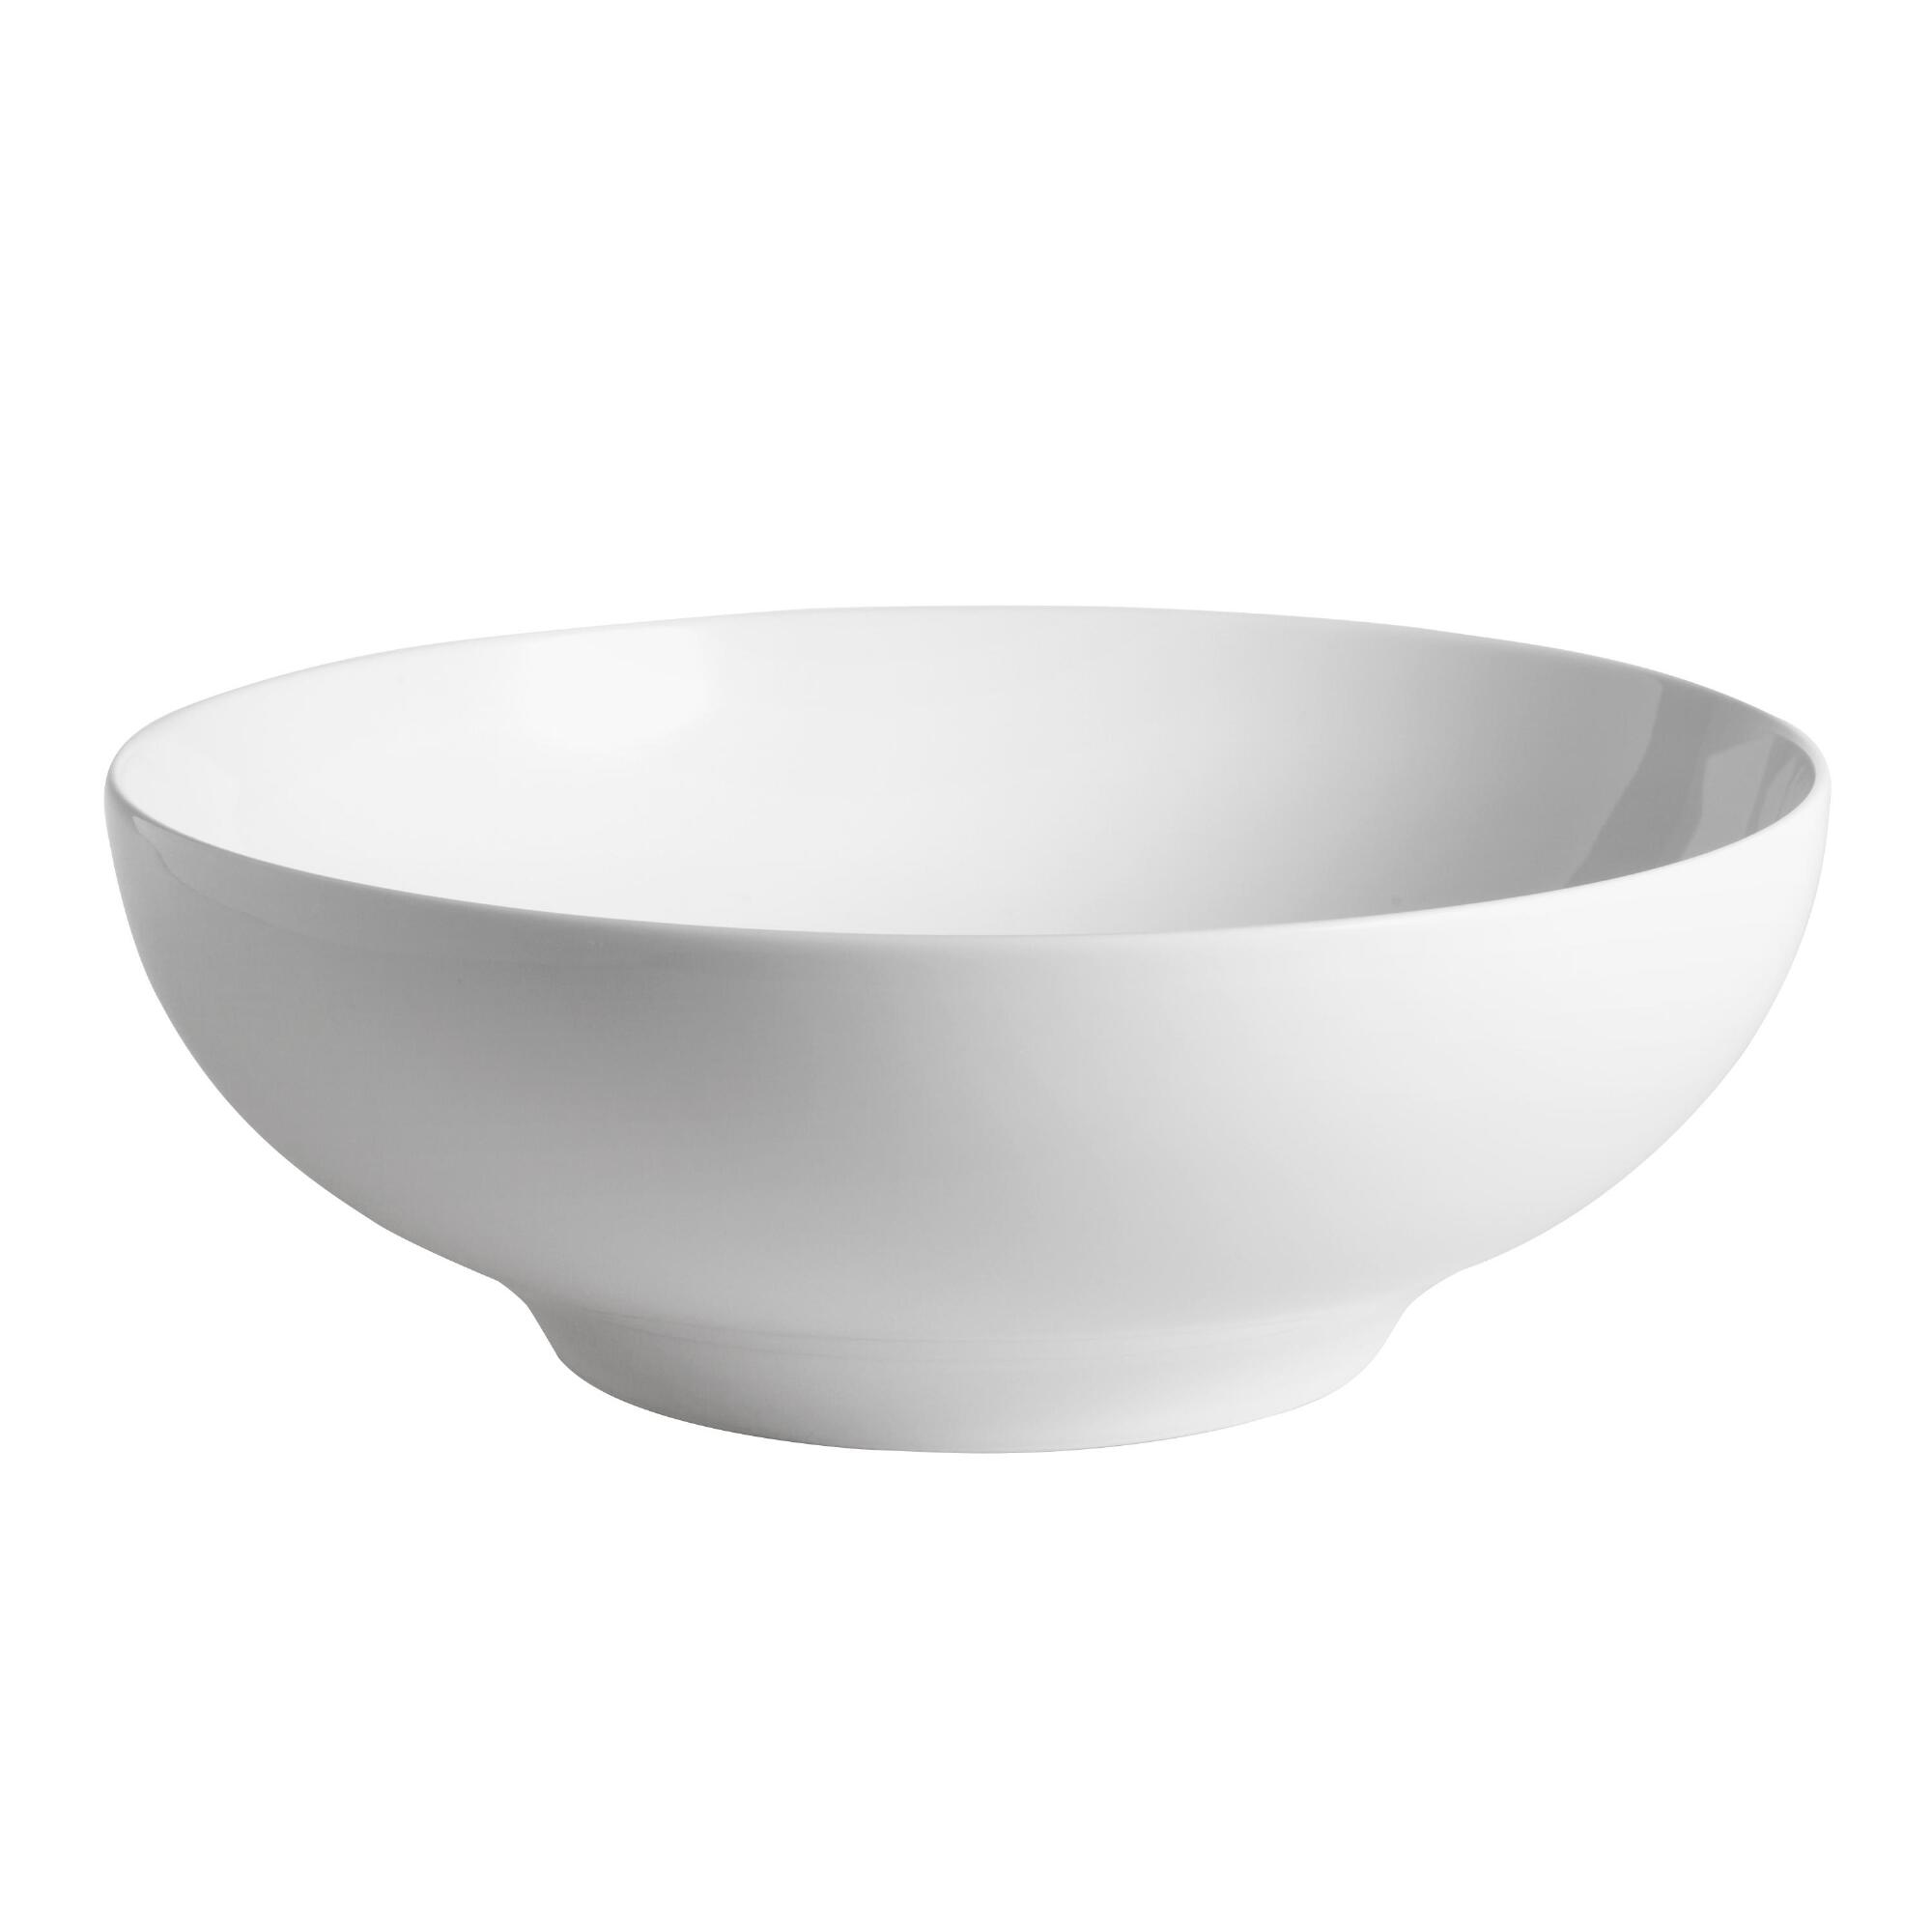 White Porcelain Spin Serving Bowl by World Market